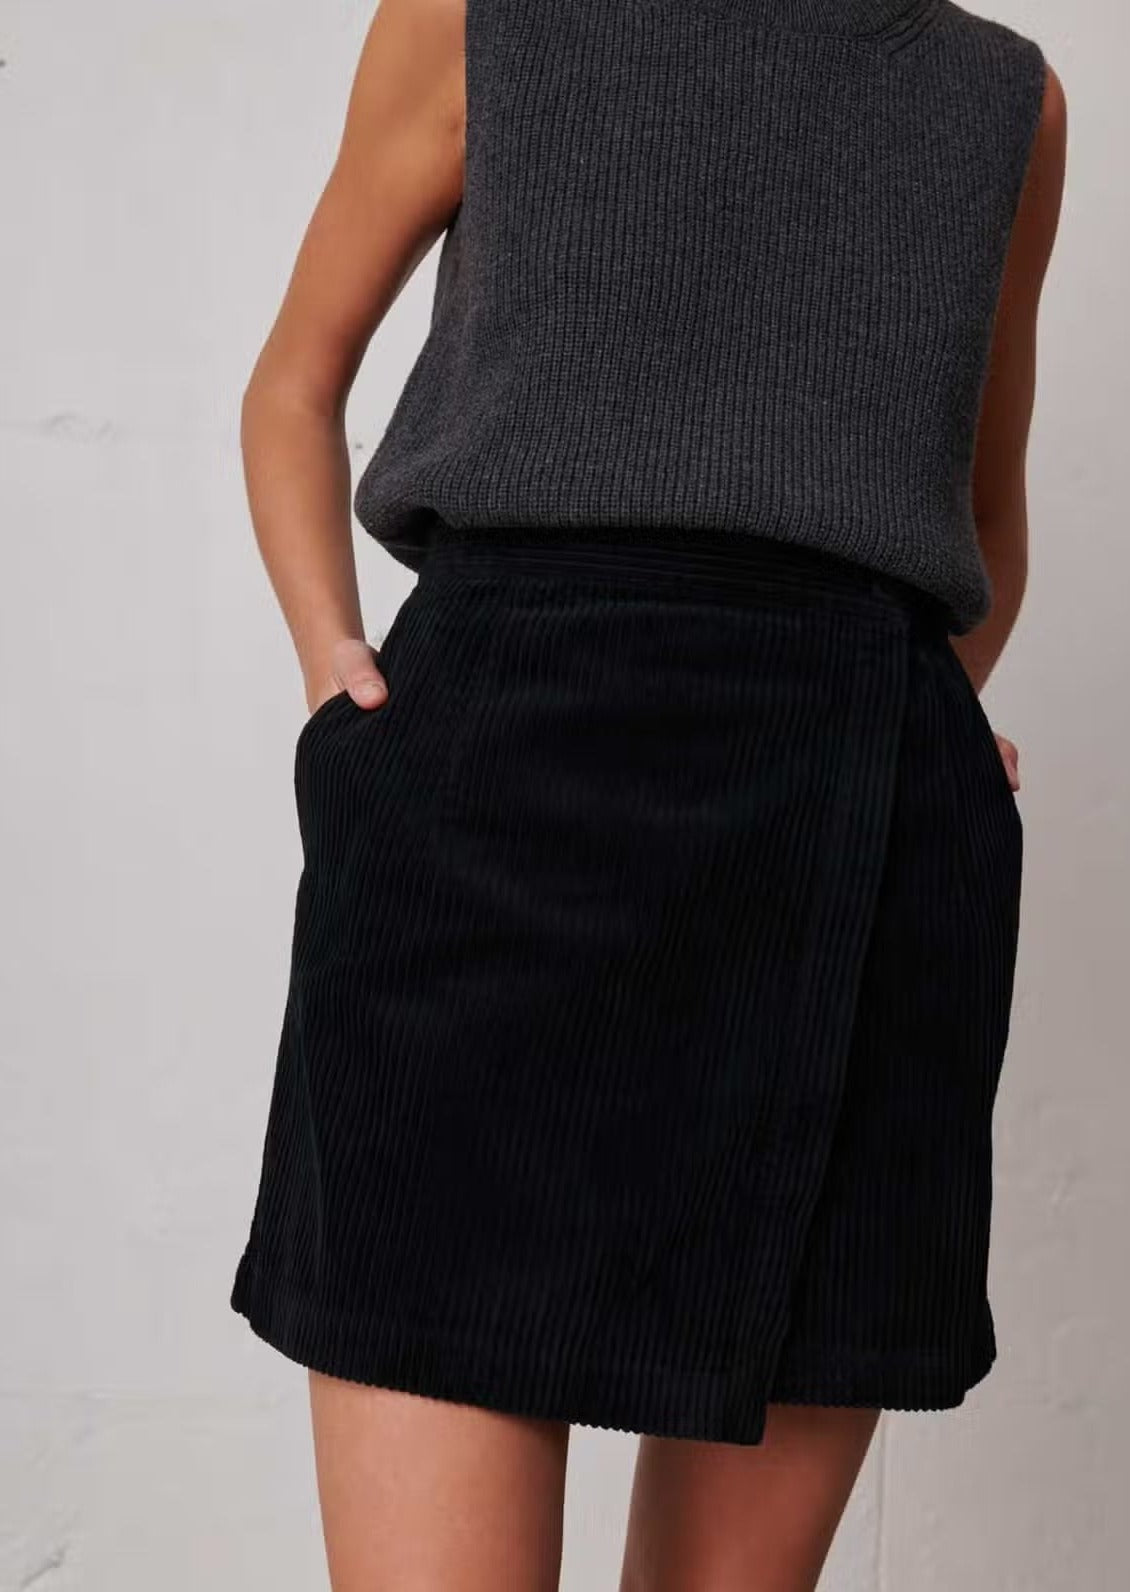 June Corduroy Wallet Skirt